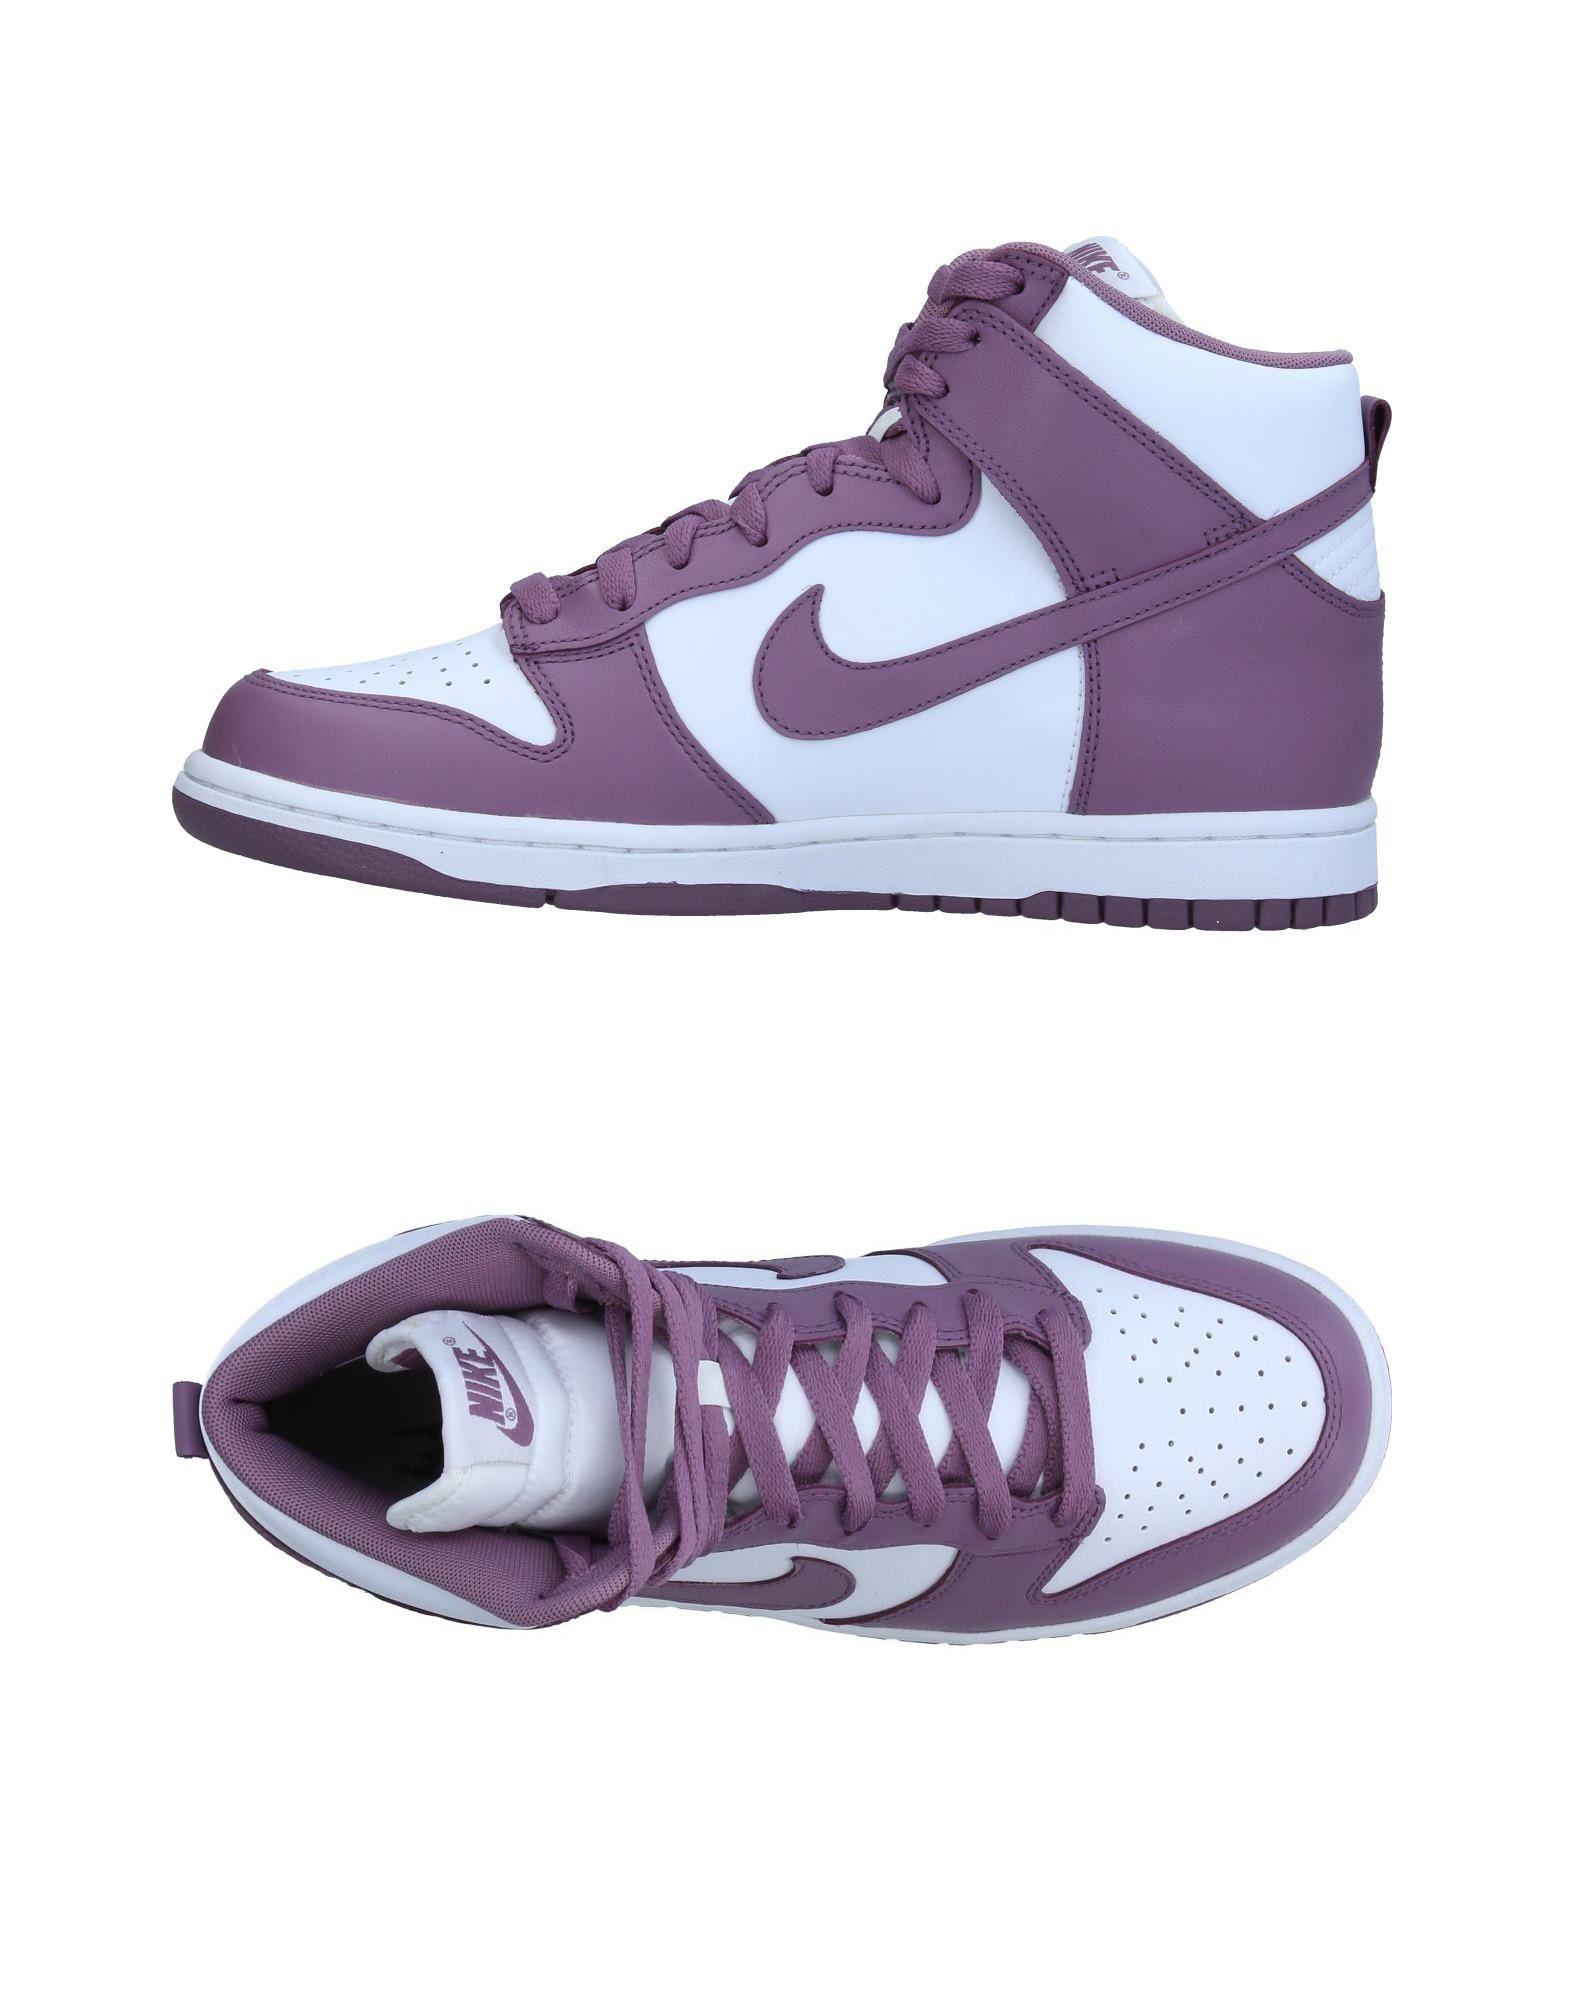 Nike High-tops & Sneakers in Purple | Lyst